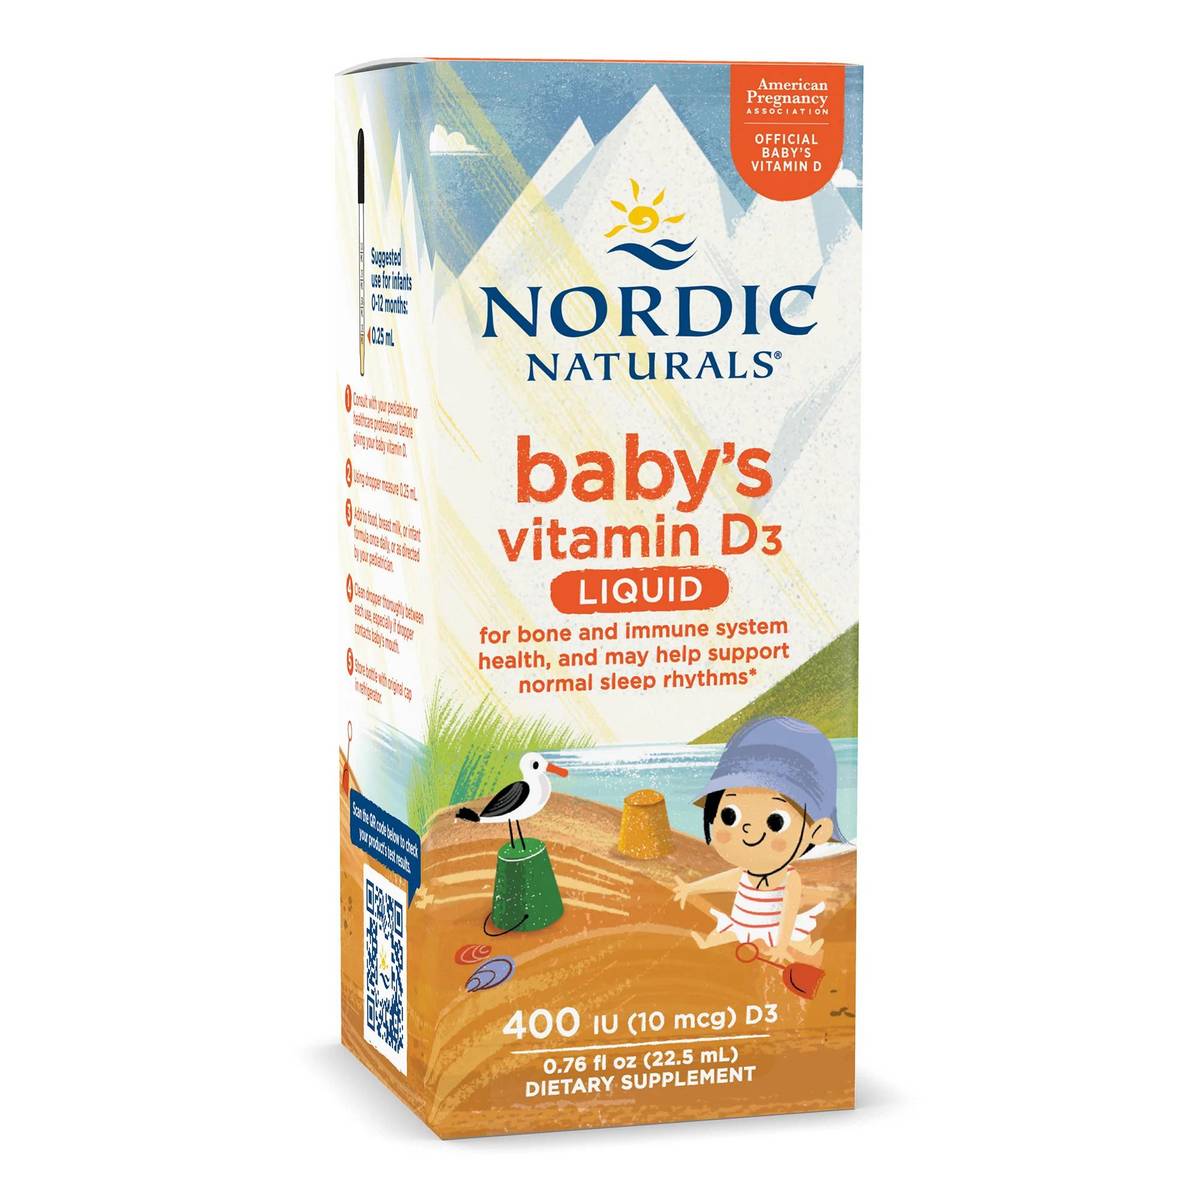 Primary Image of Baby's Vitamin D3 Liquid